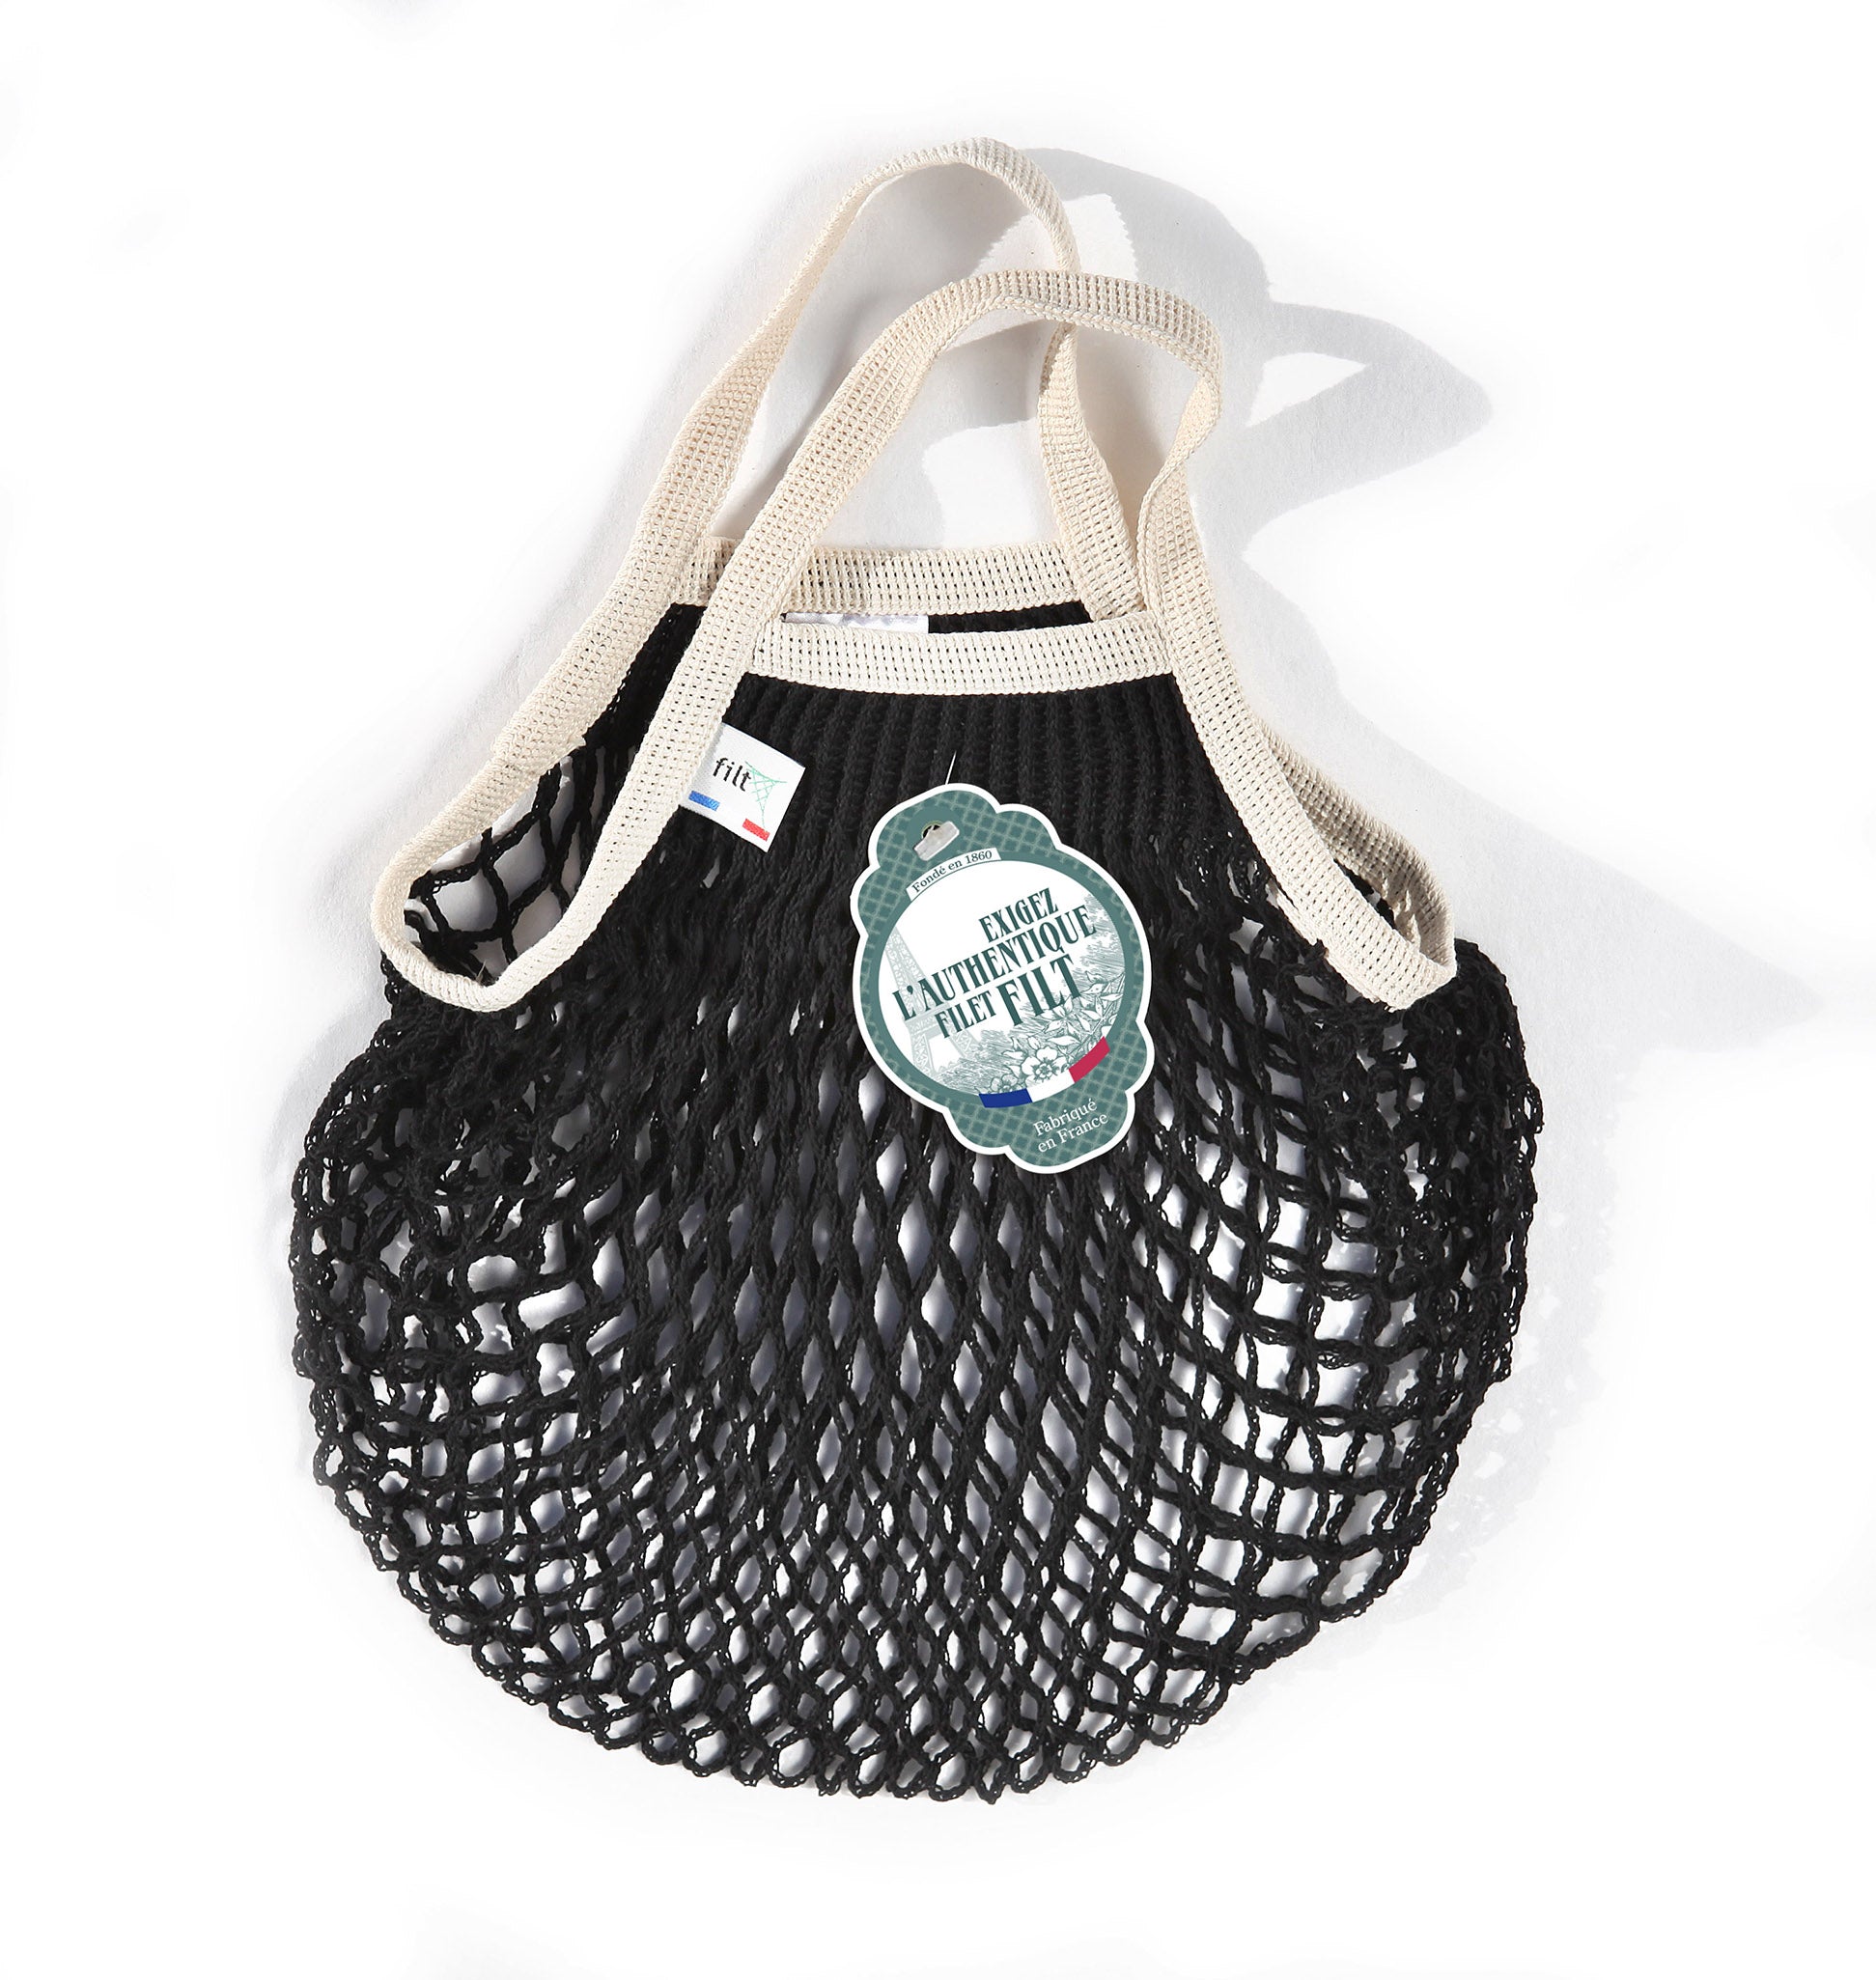 Filt Mini Bag in Black with Ivory Handles Bag Filt Bags Brand_Filt Shopping Bags Textiles_Shoppers 301NoirEcru